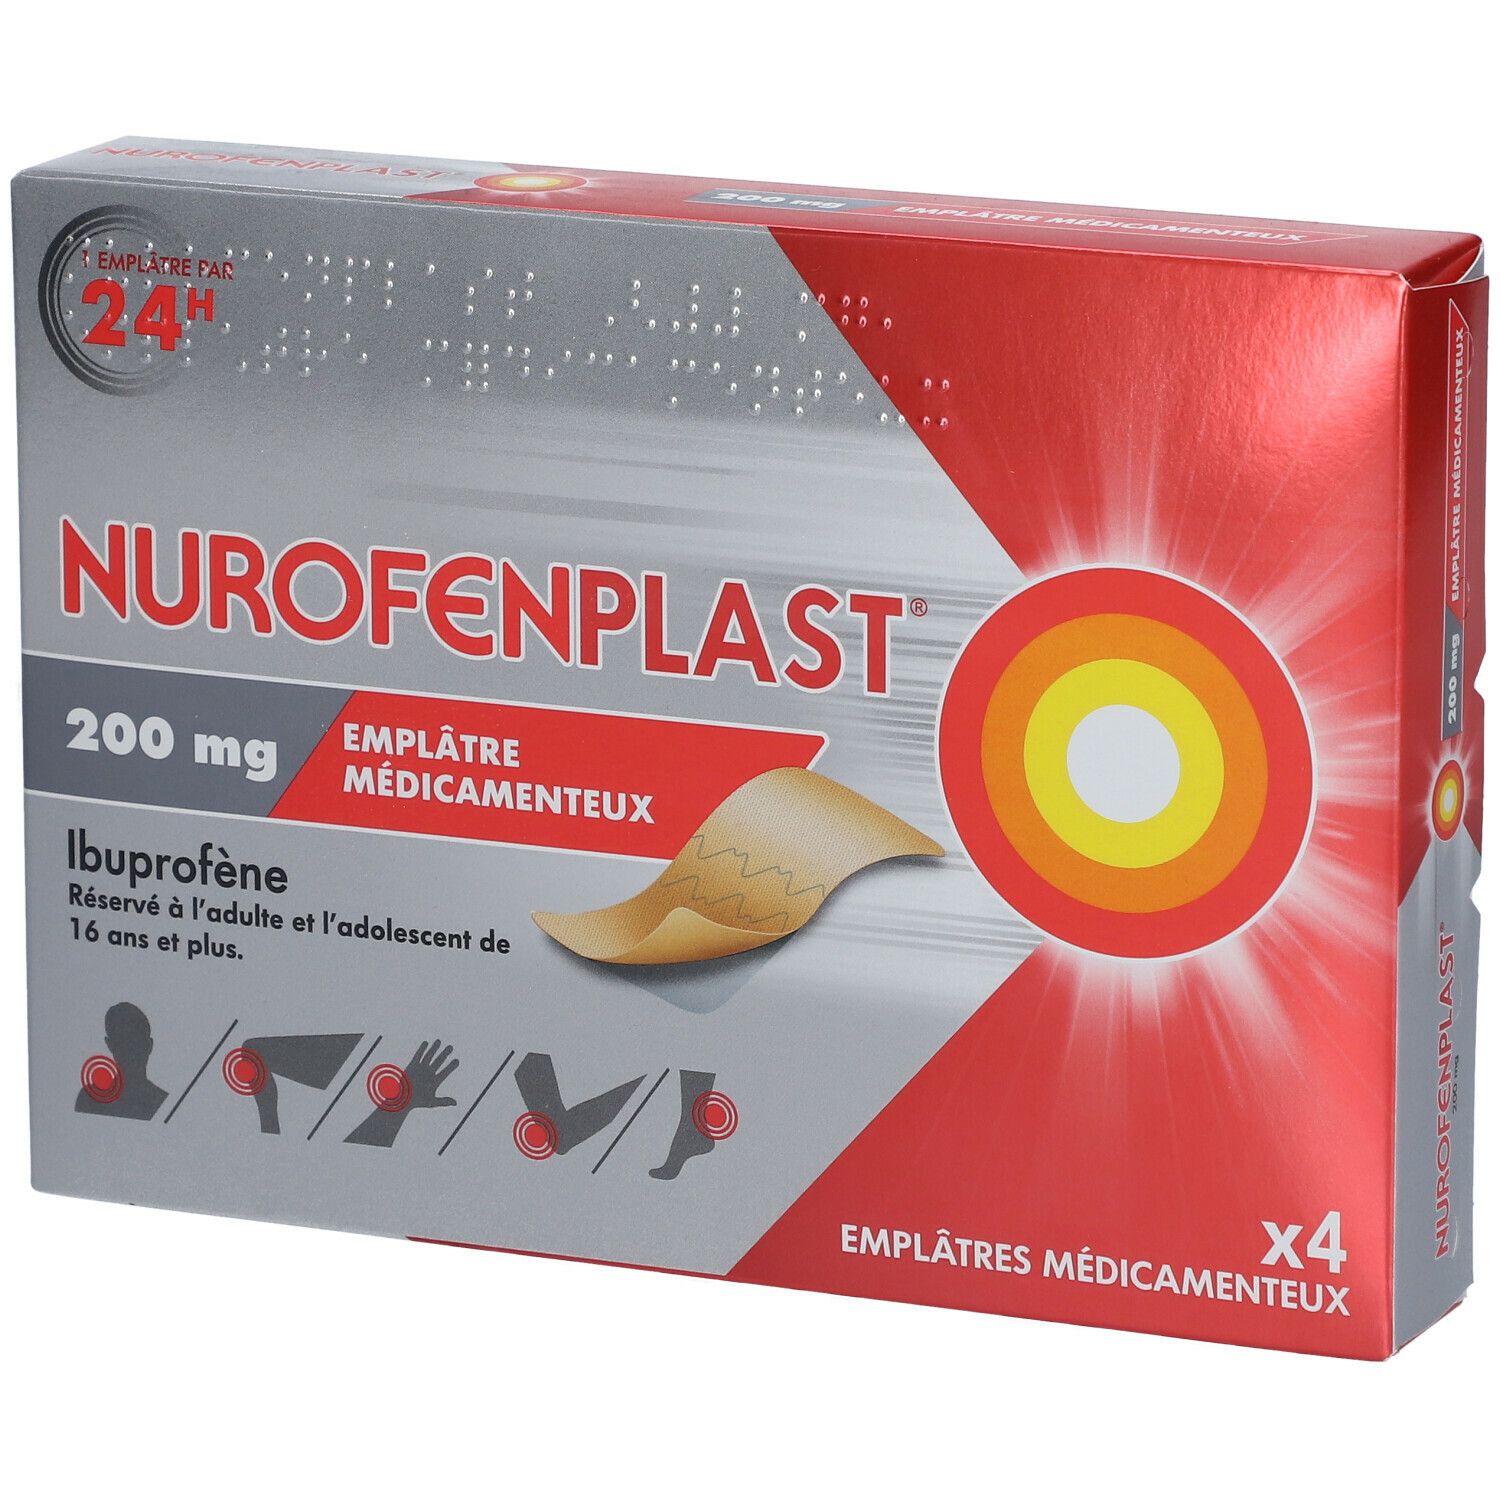 Nurofenplast® 200 mg